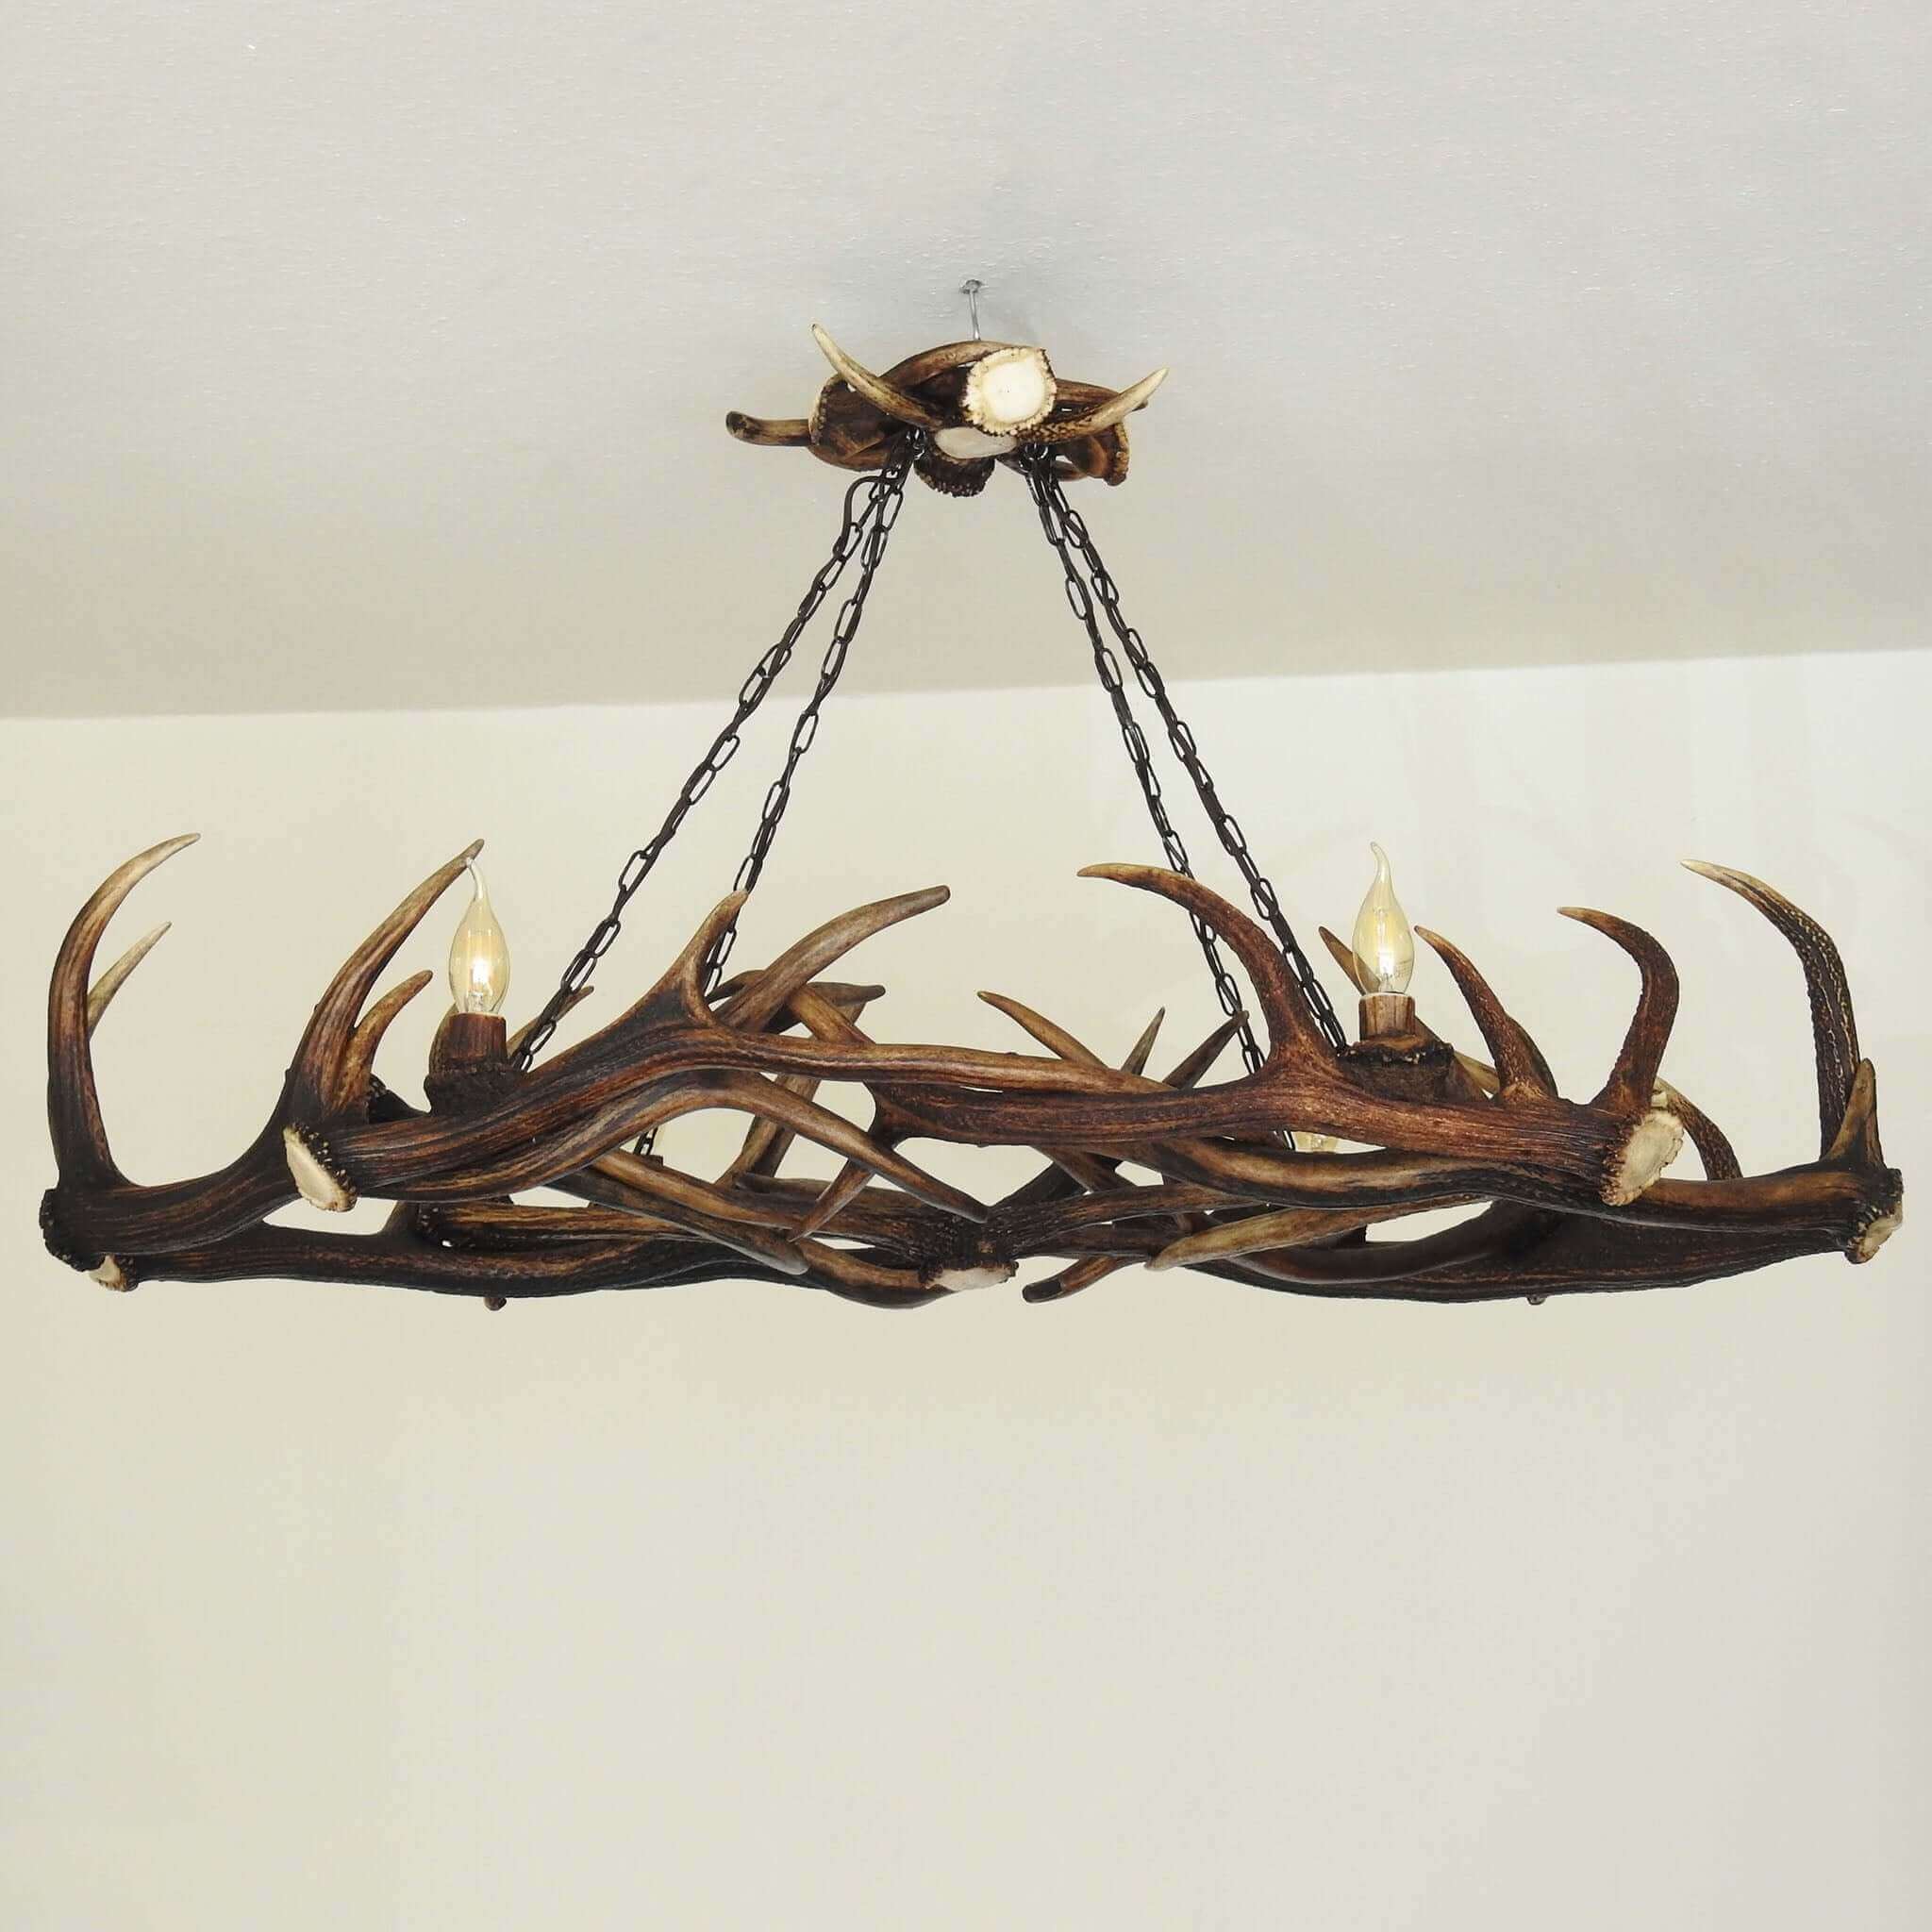 Rustic deer antler chandelier for livingroom.